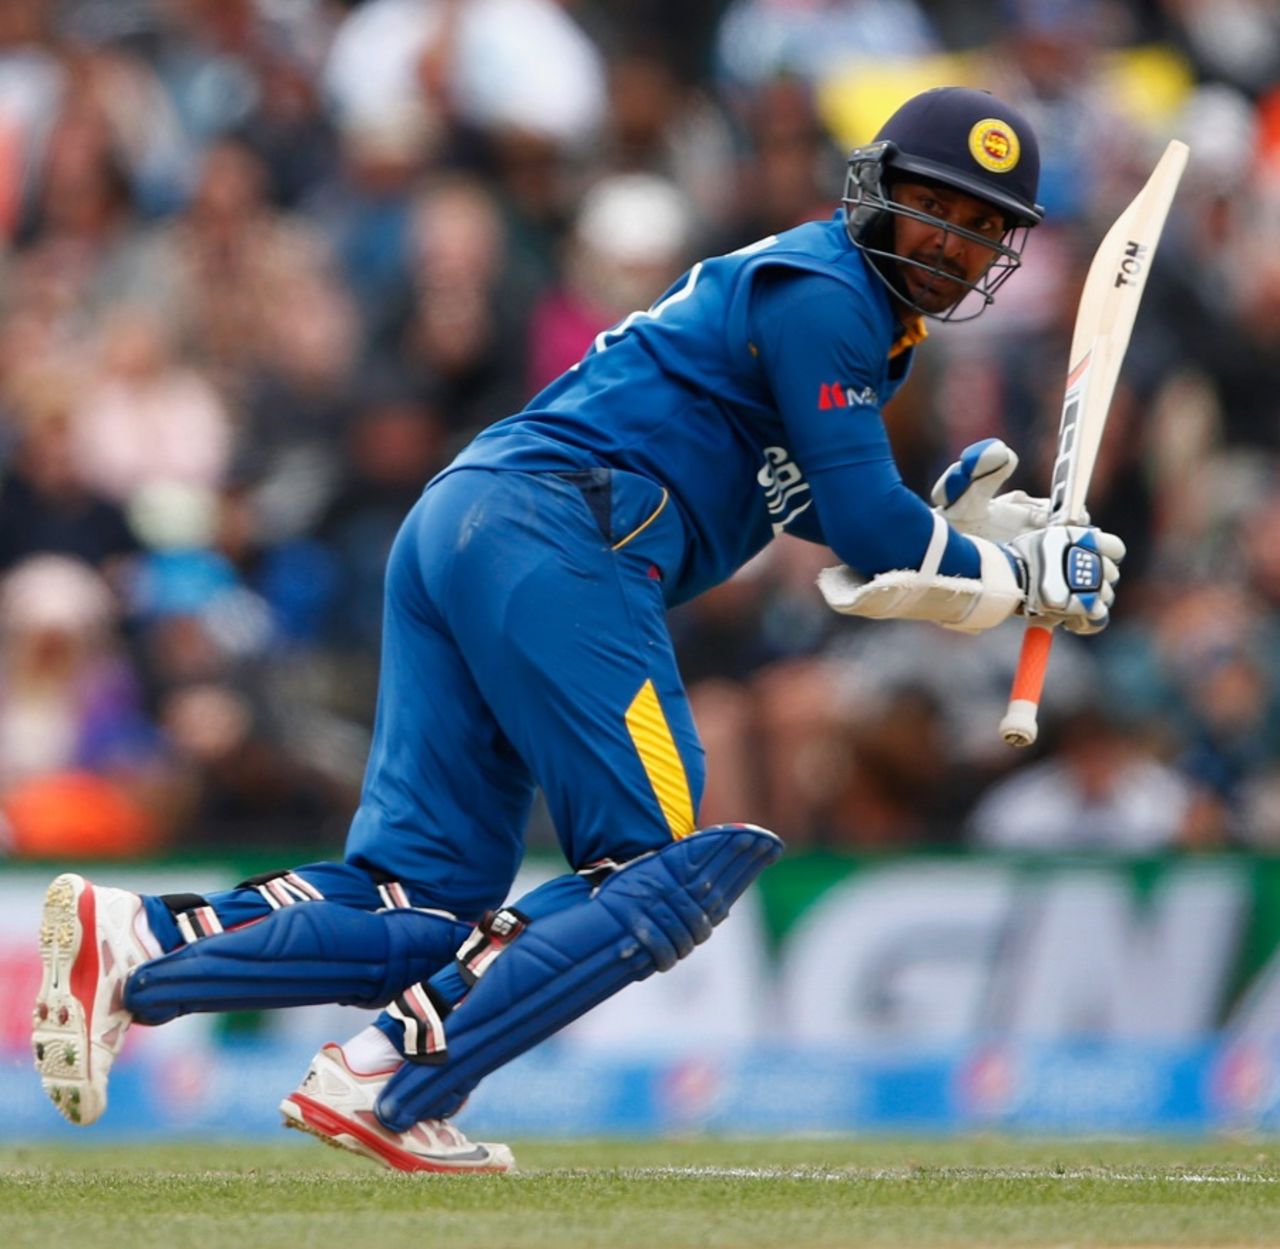 Kumar Sangakkara scored 39 off 38 balls before he was pinned lbw by Trent Boult, New Zealand v Sri Lanka, Group A, World Cup 2015, Christchurch, February 14, 2015